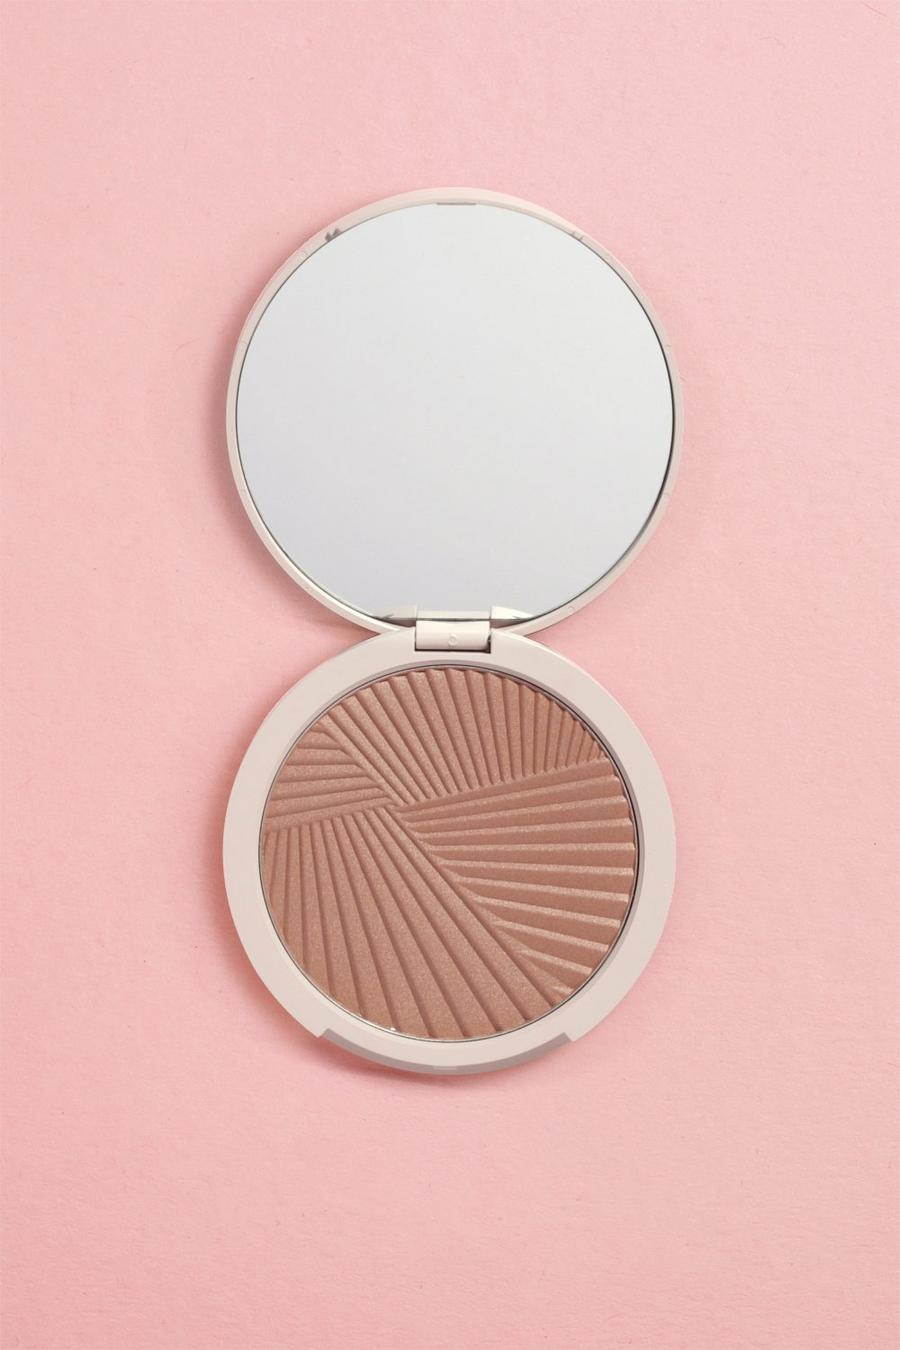 Boohoo Beauty -  Poudre bronzante avec miroir, Light marron